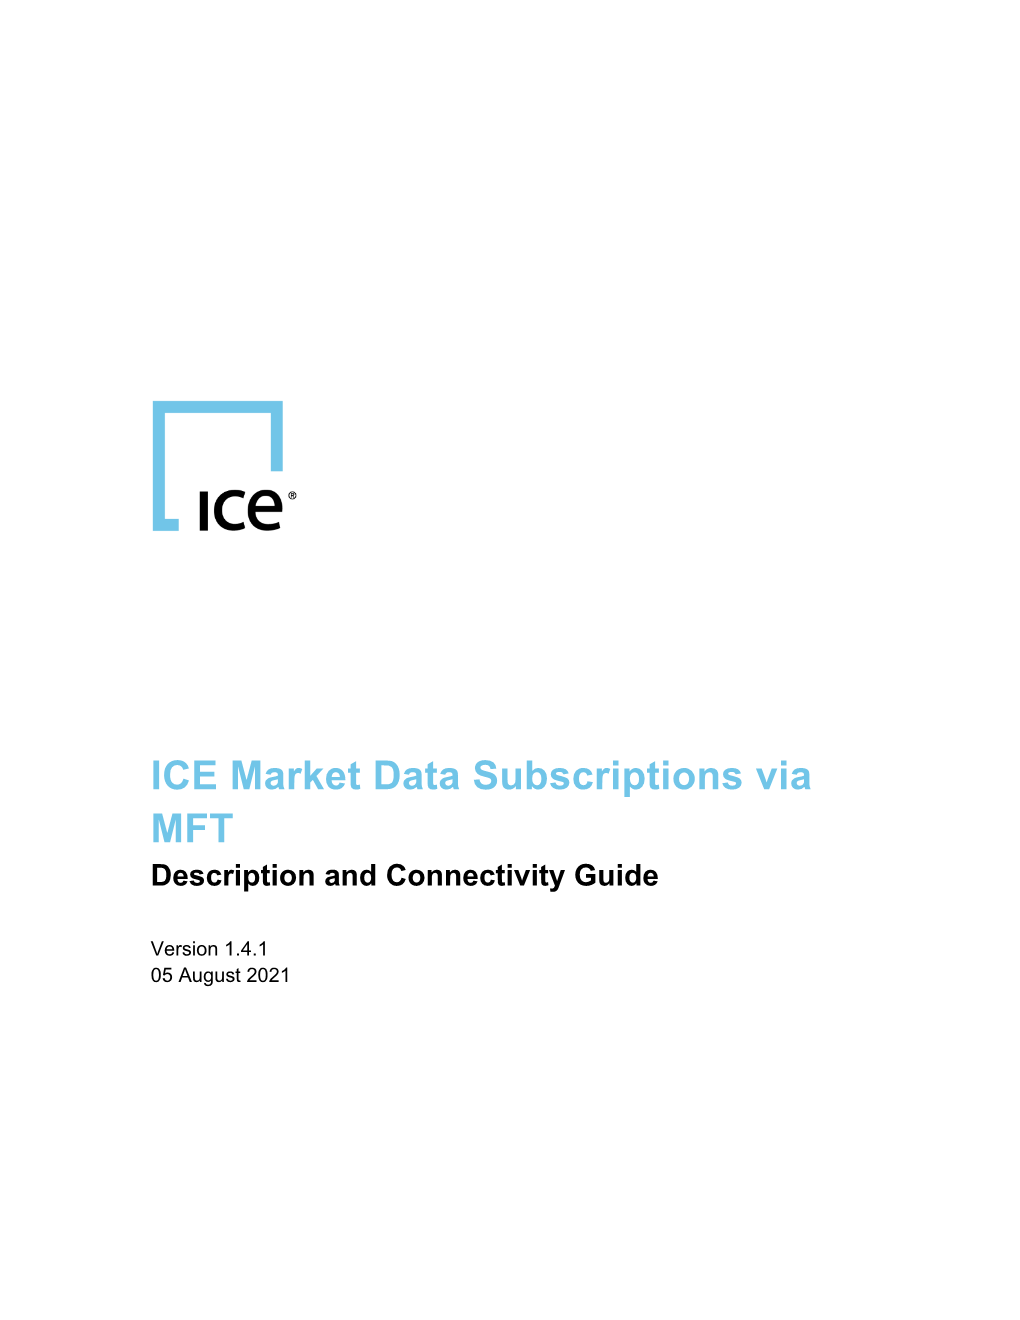 ICE Market Data Subscriptions Via MFT Description and Connectivity Guide